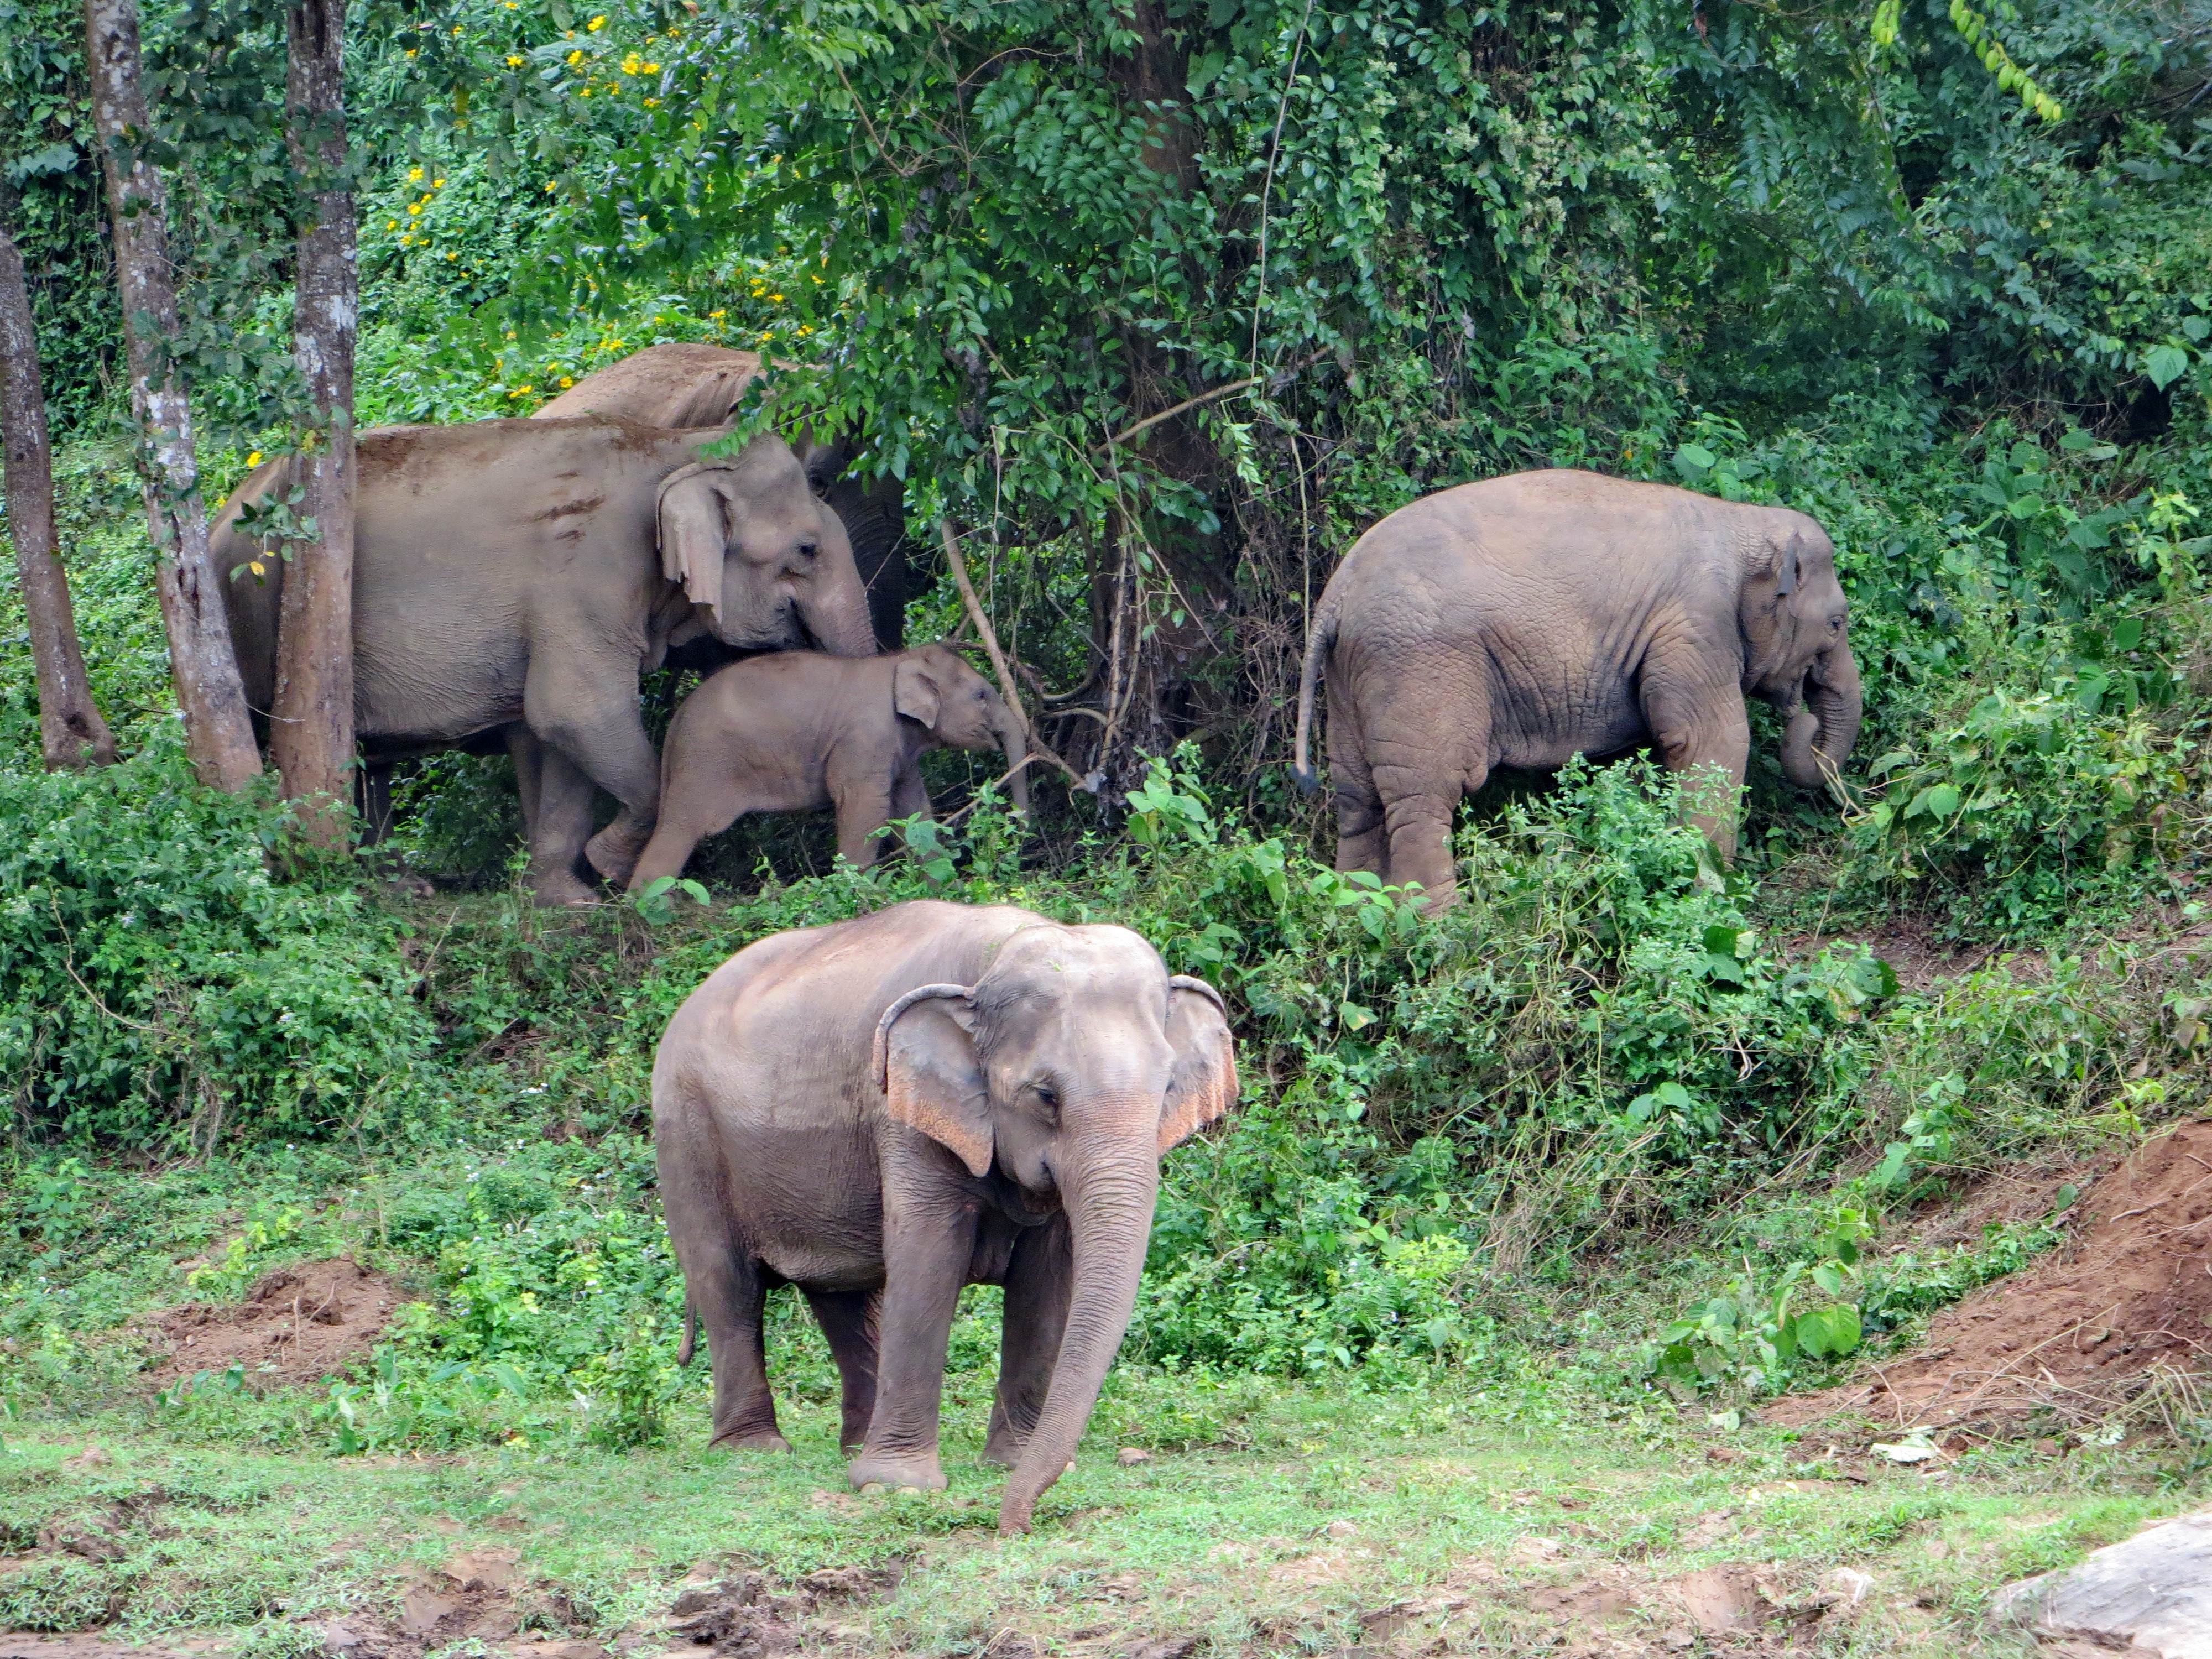 Elephants near Nai Harn, Phuket, Thailand. Photo taken on November 30, 2013.